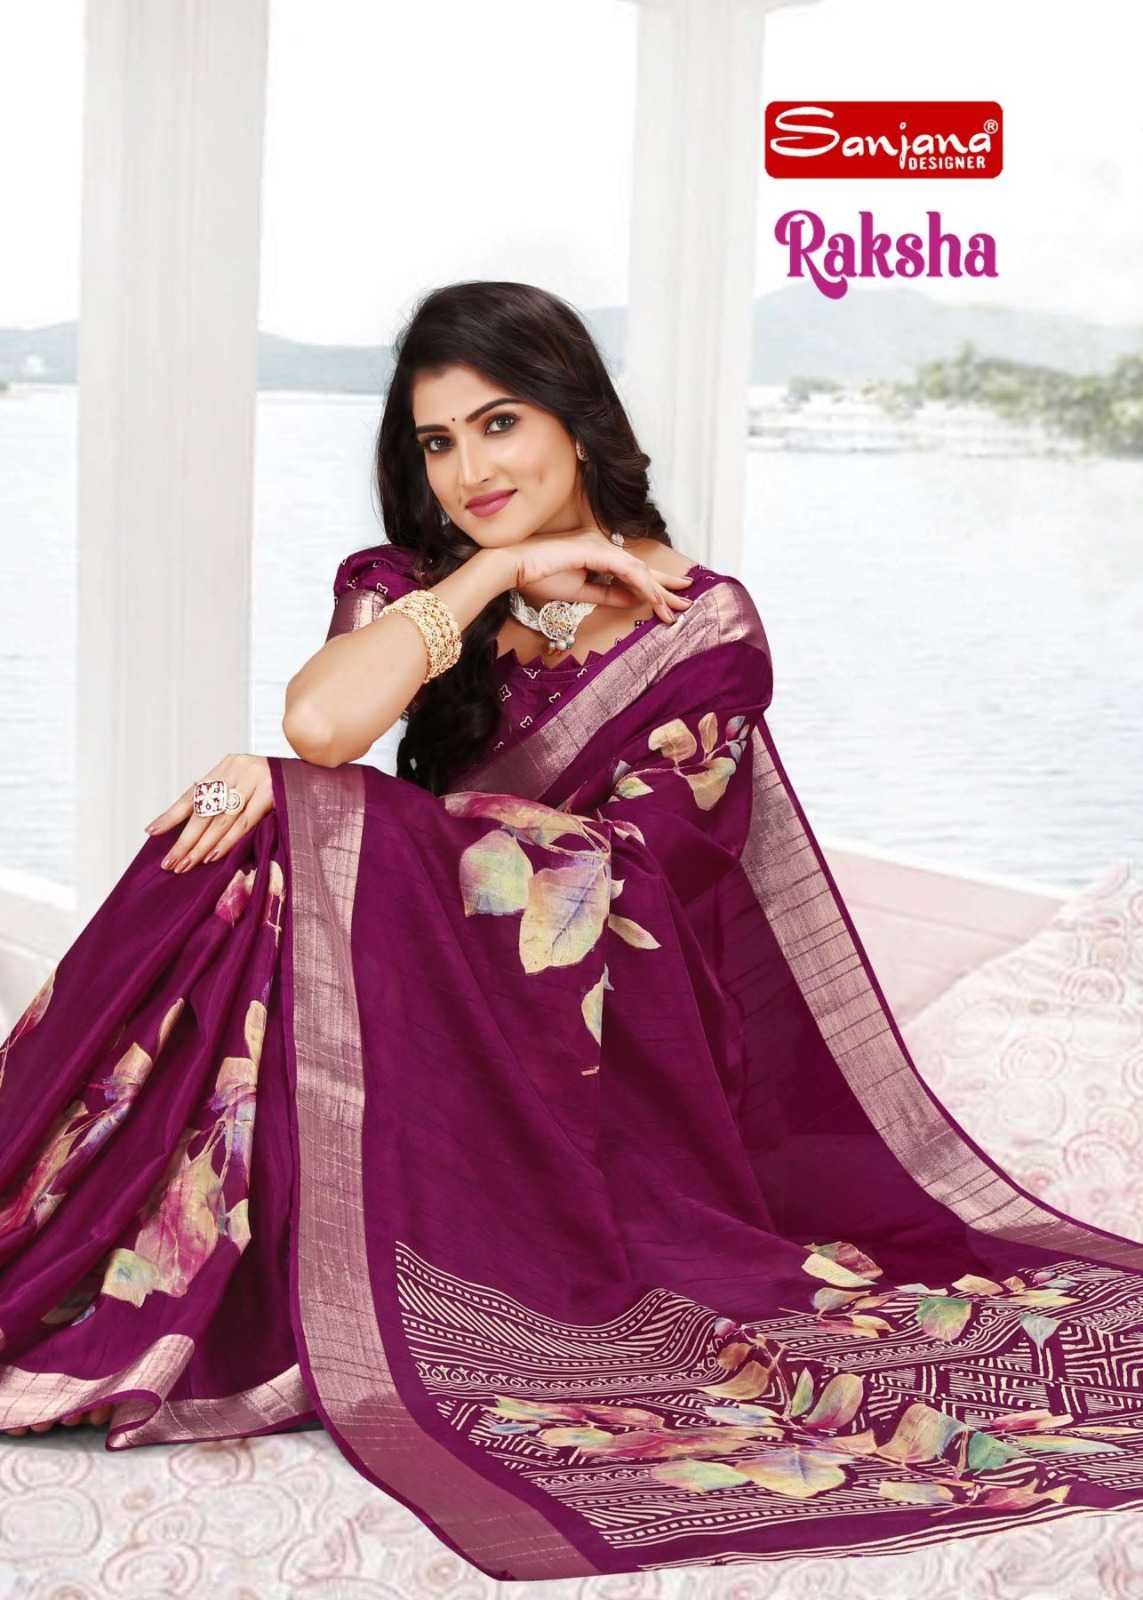 sanjana designer raksha amazing cotton sarees catalog